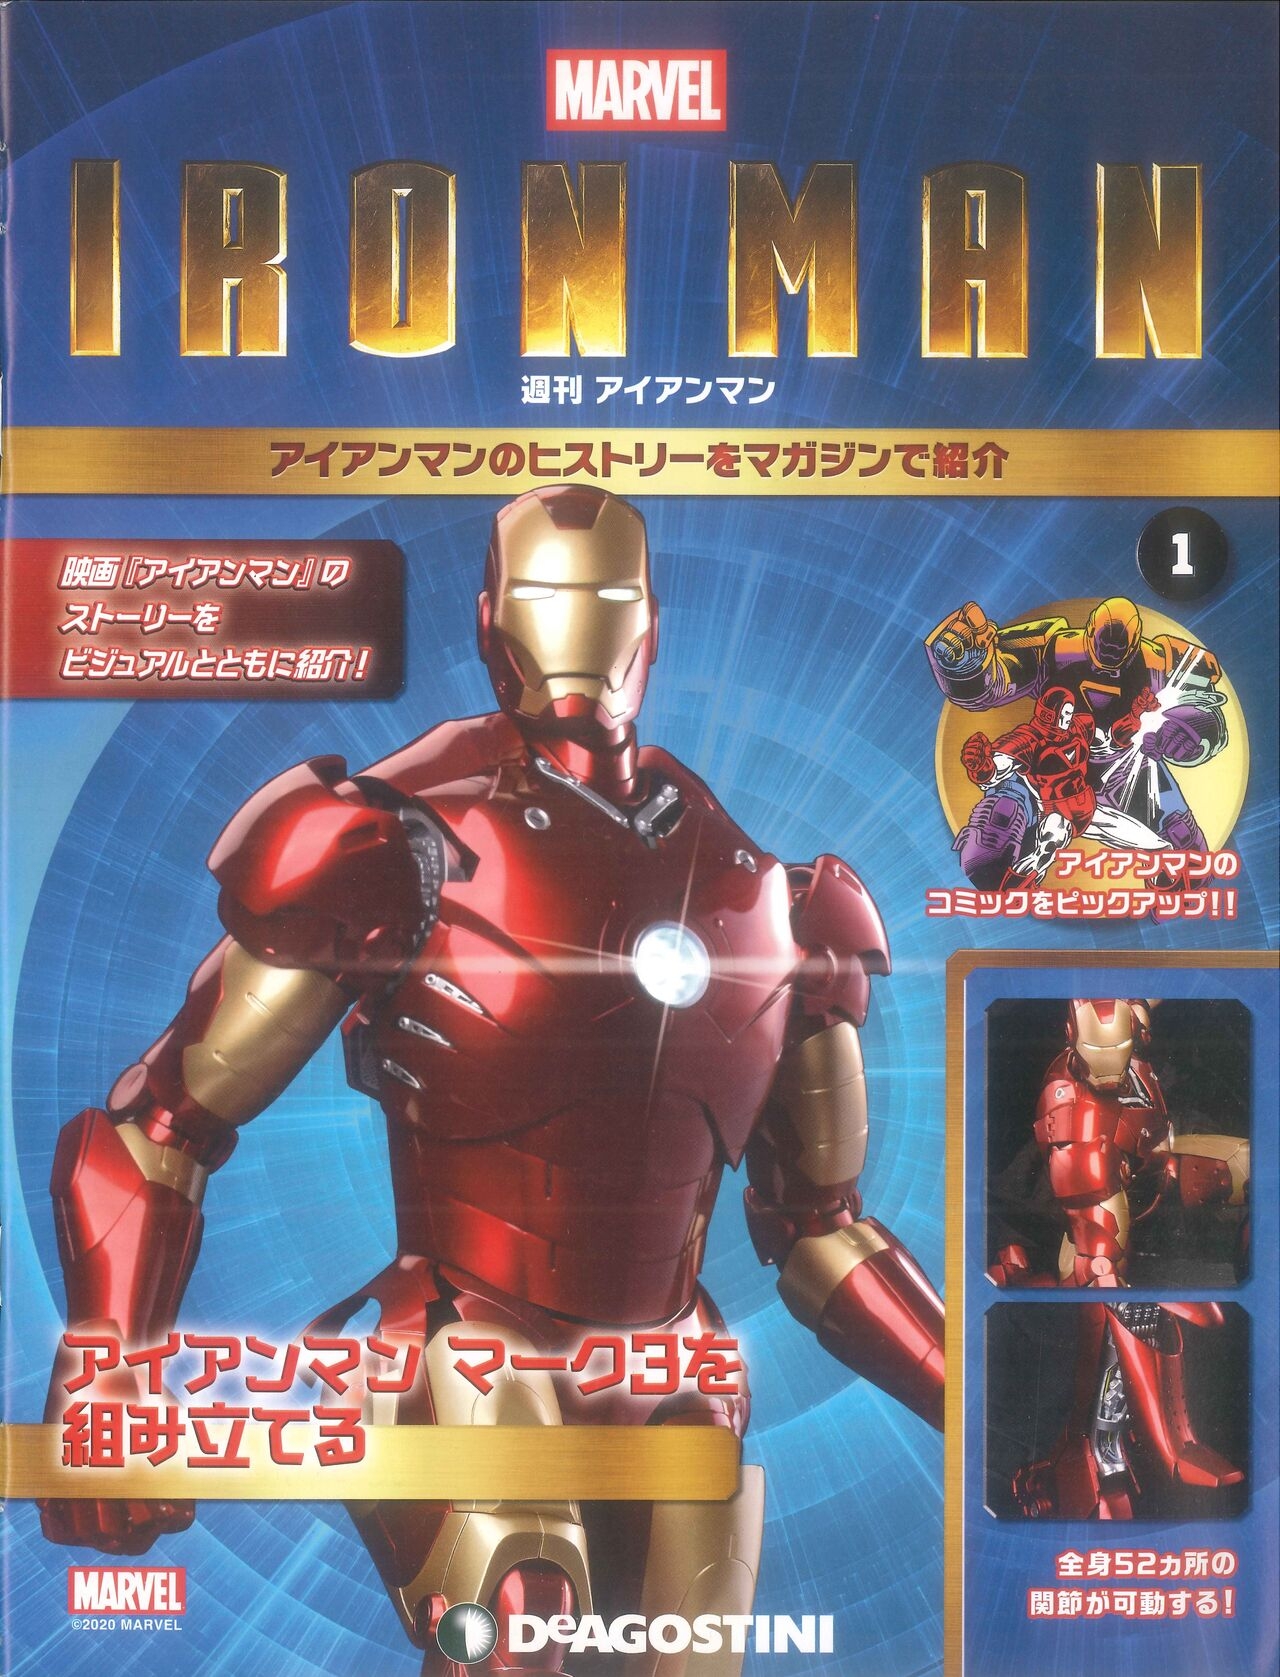 Weekly Iron Man Vol.1 0